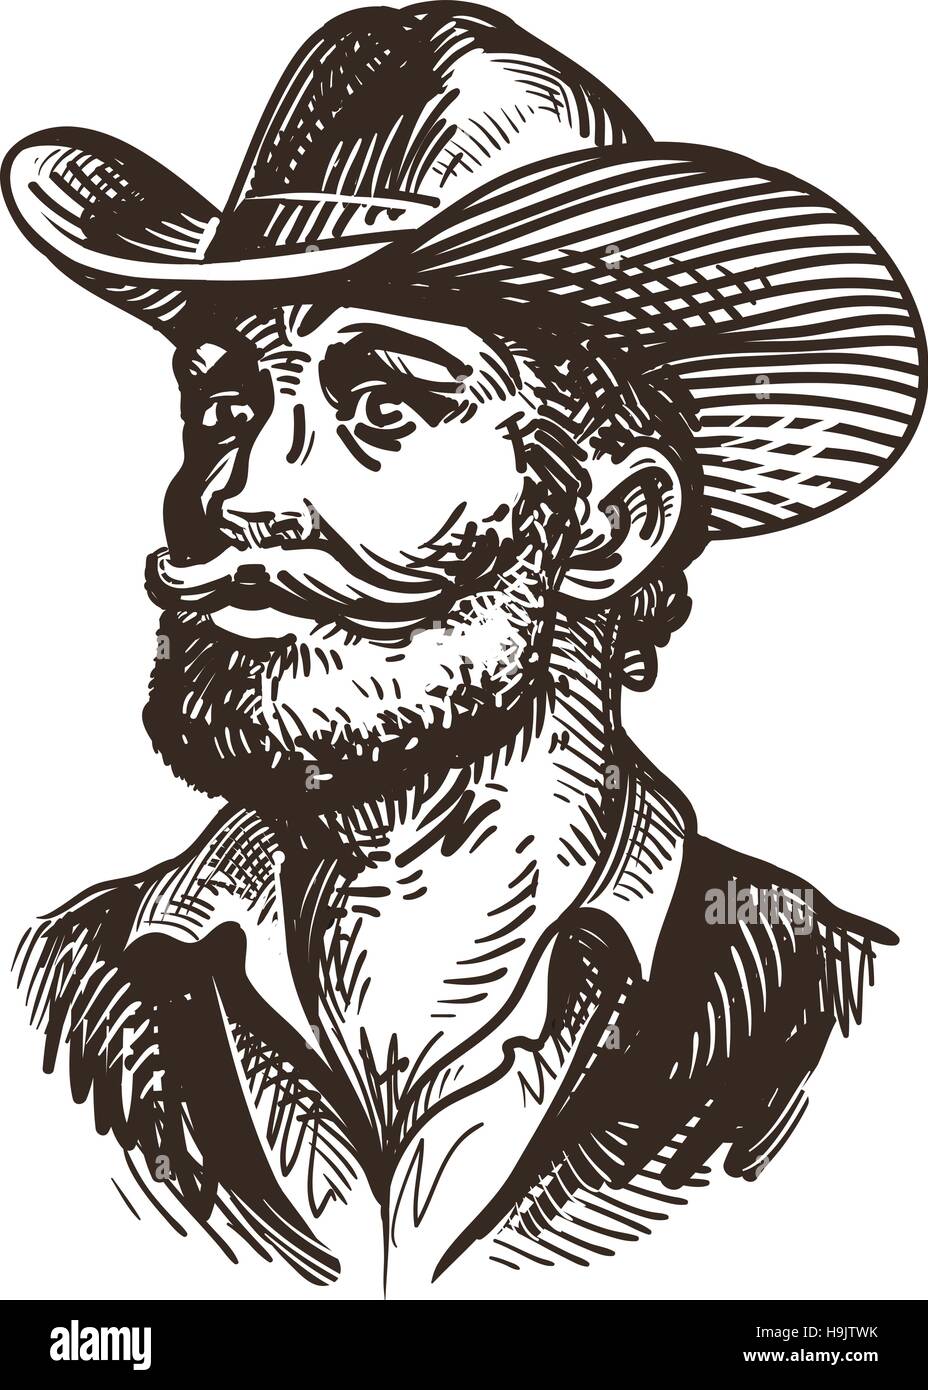 Cowboy, rancher or farmer. Hand drawn sketch vector illustration Stock Vector